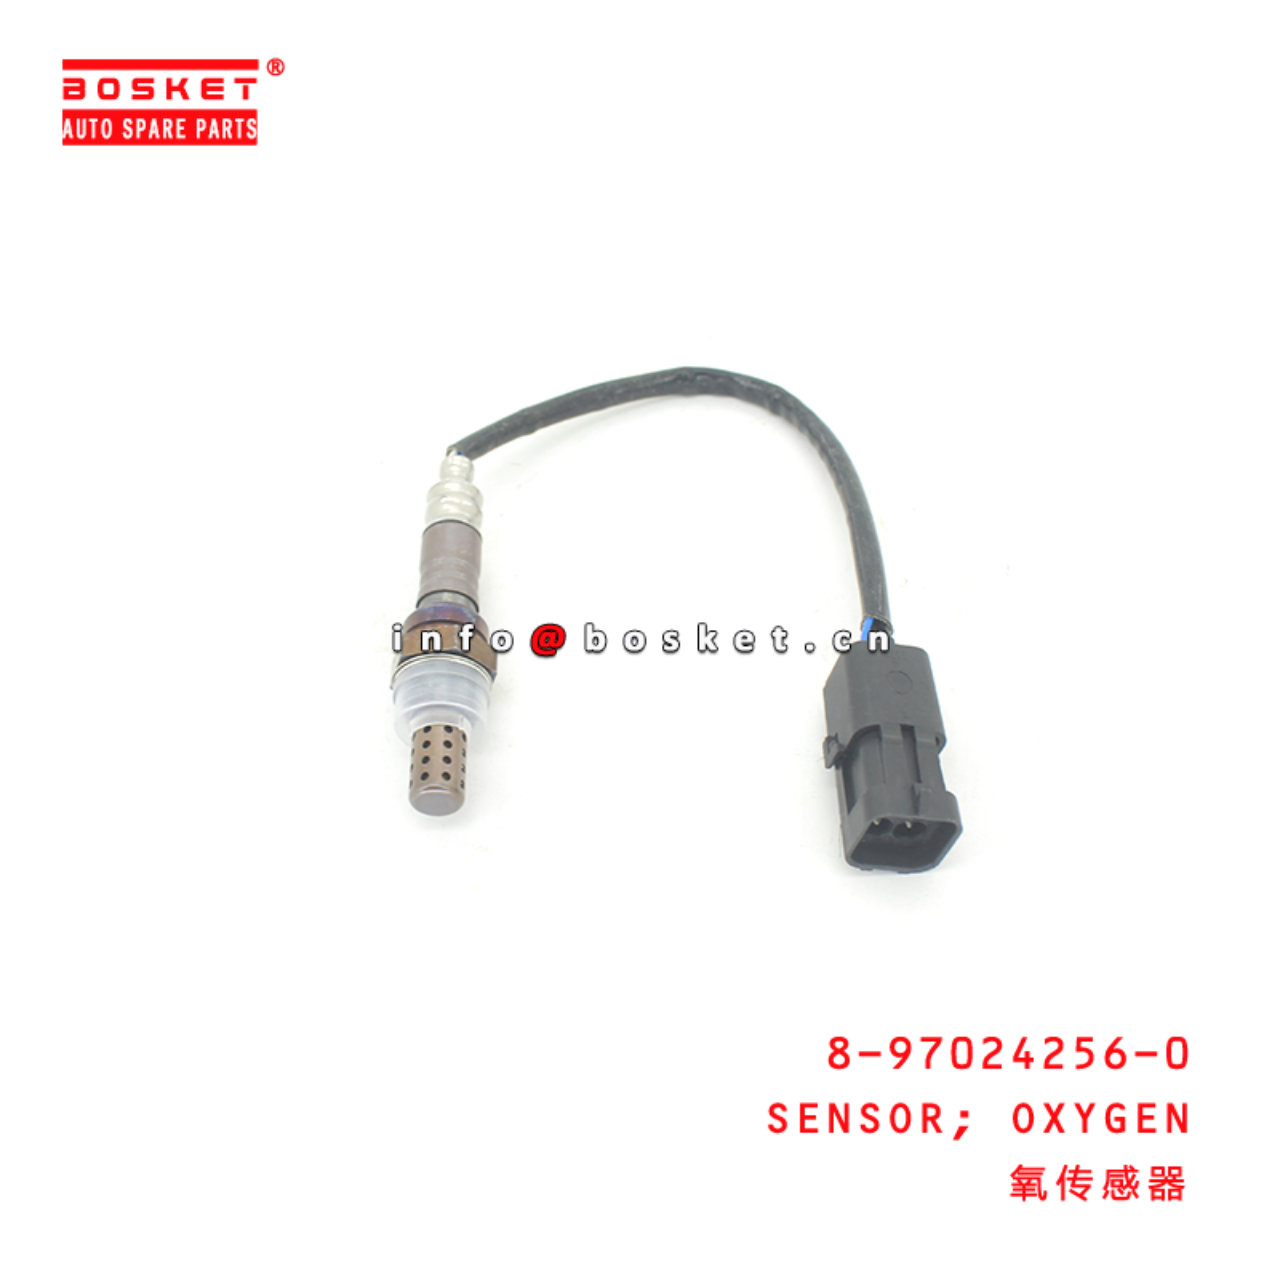 8-97024256-0 Oxygen Sensor suitable for ISUZU 8970242560